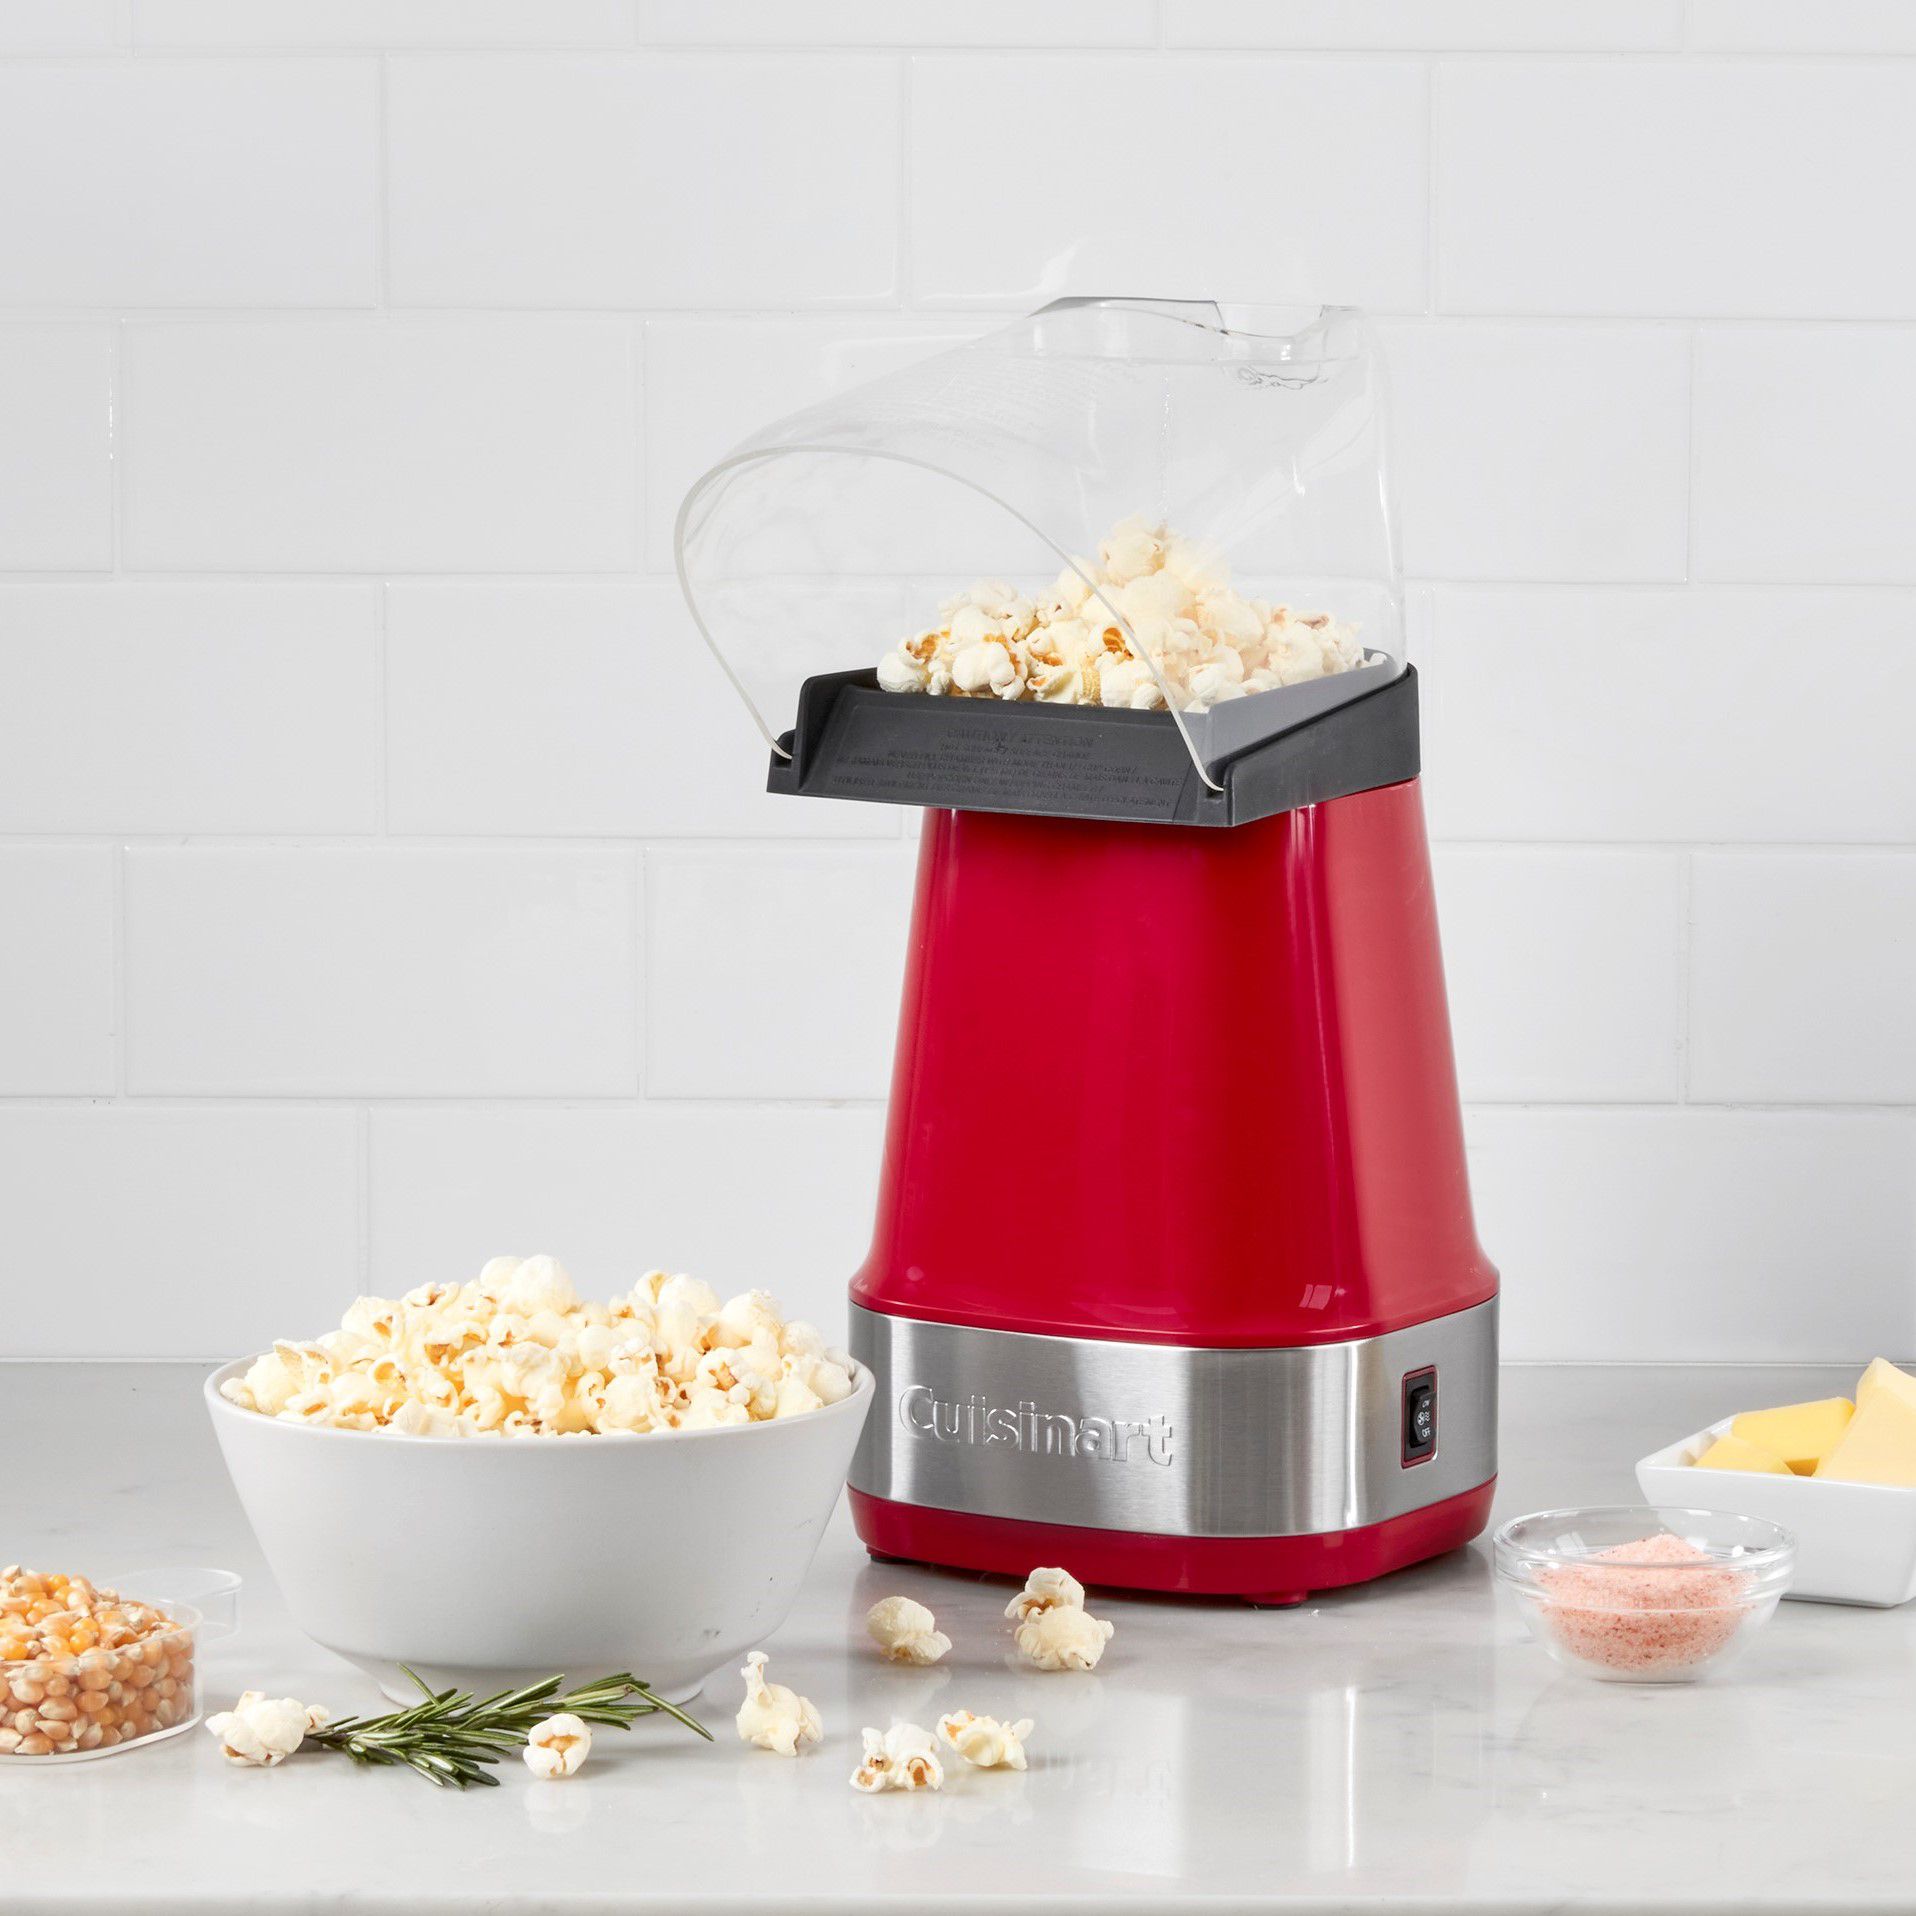 Cuisinart 1500-Watt EasyPop Hot Air Popcorn Maker, White 